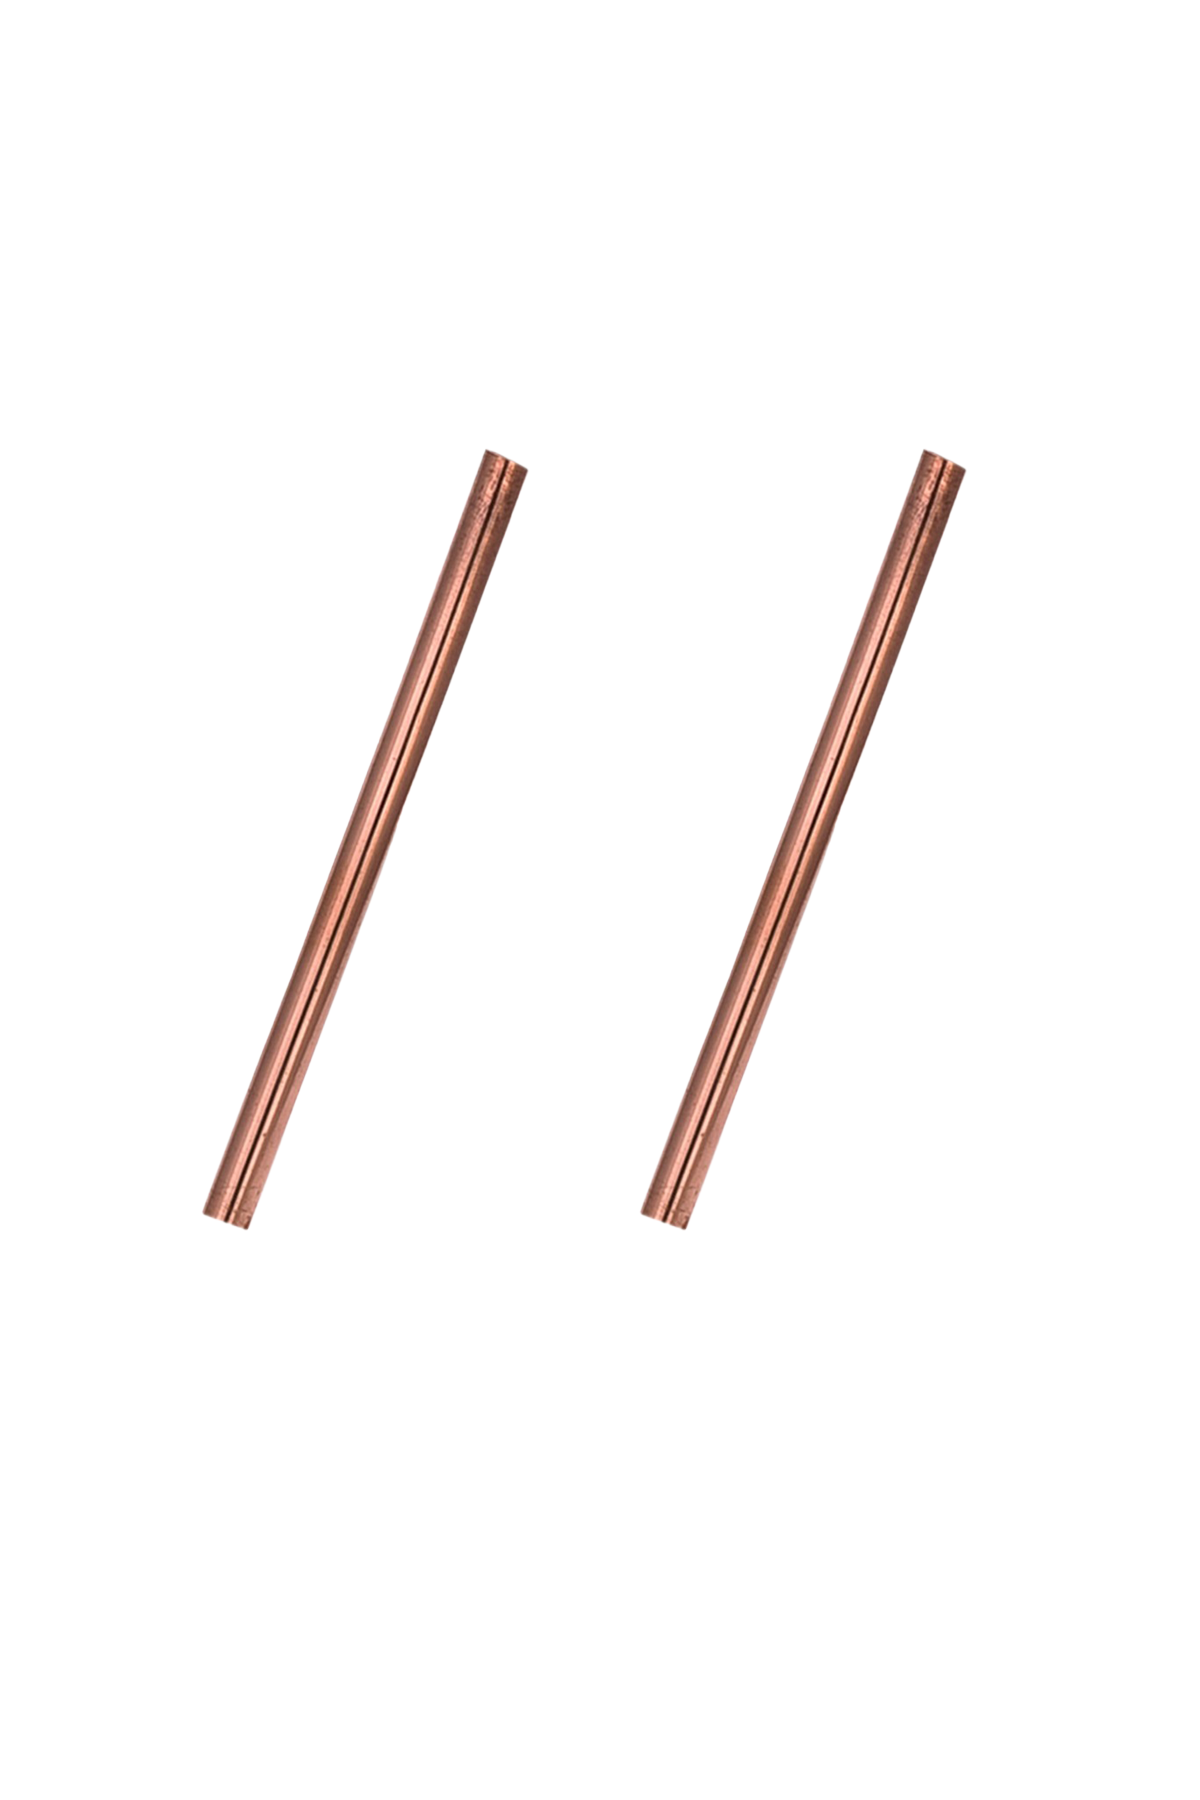 Copper Straw Straigh Set of 2